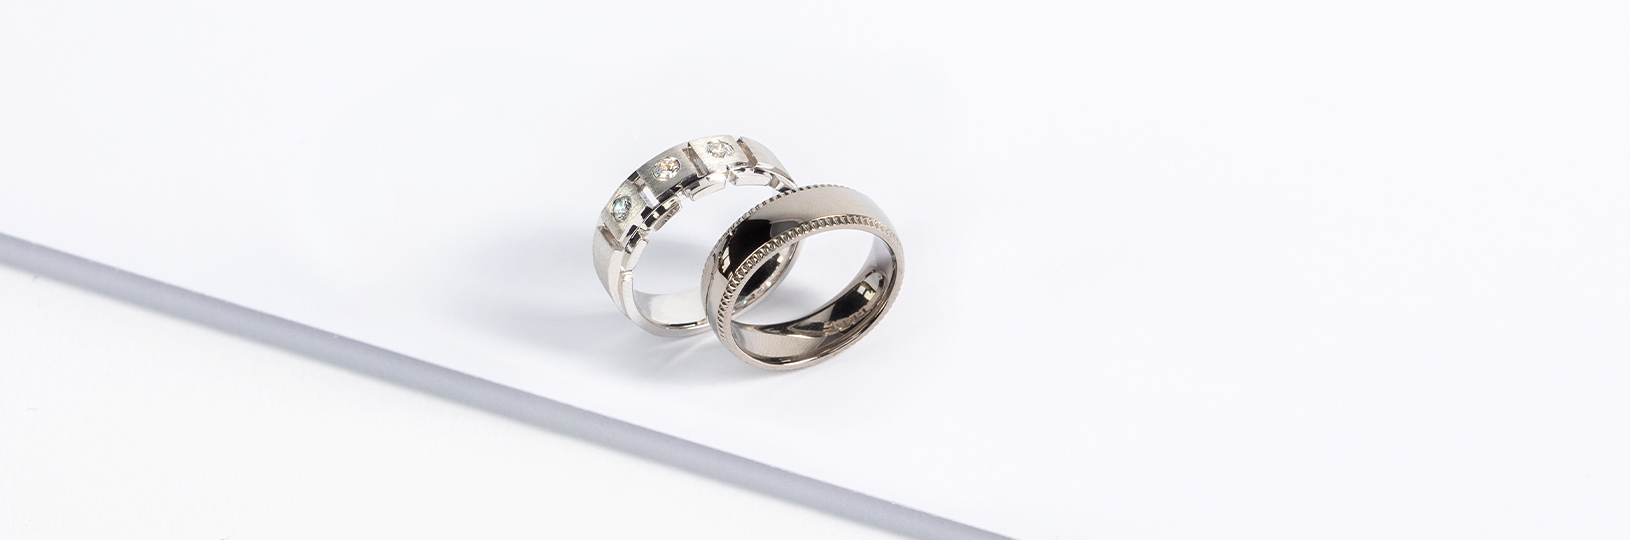 Unique Wedding Rings For Men - Vidar Jewelry - Unique Custom Engagement And Wedding  Rings